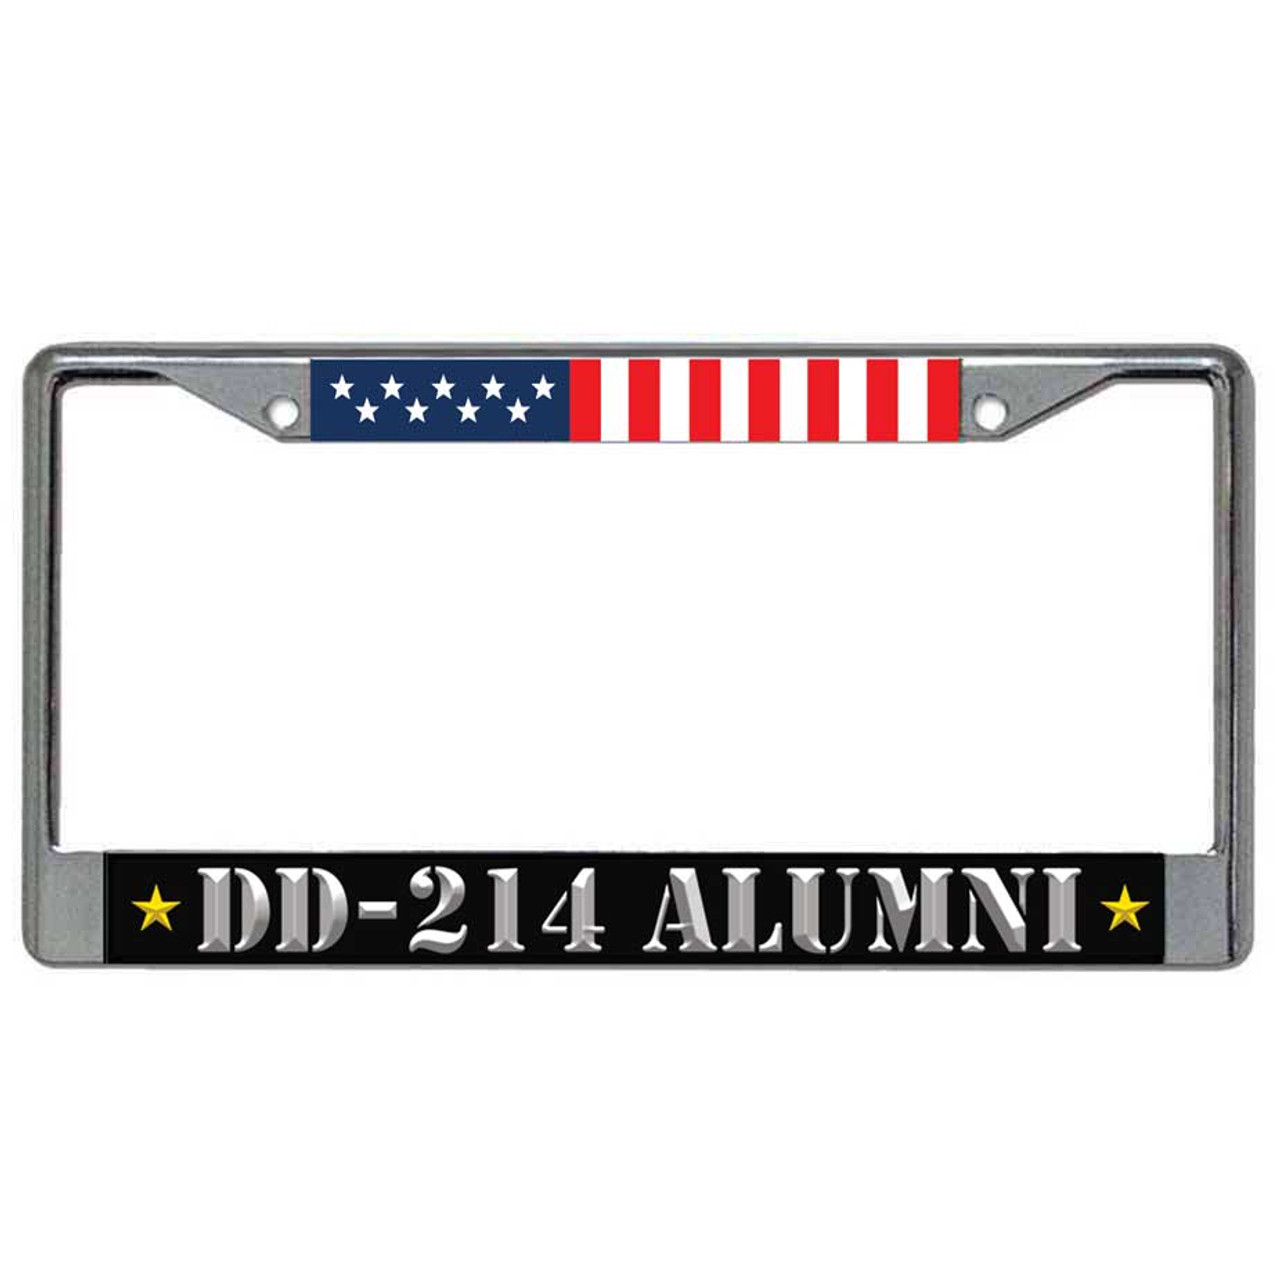 us veteran license plate frame dd214 alumni and us flag